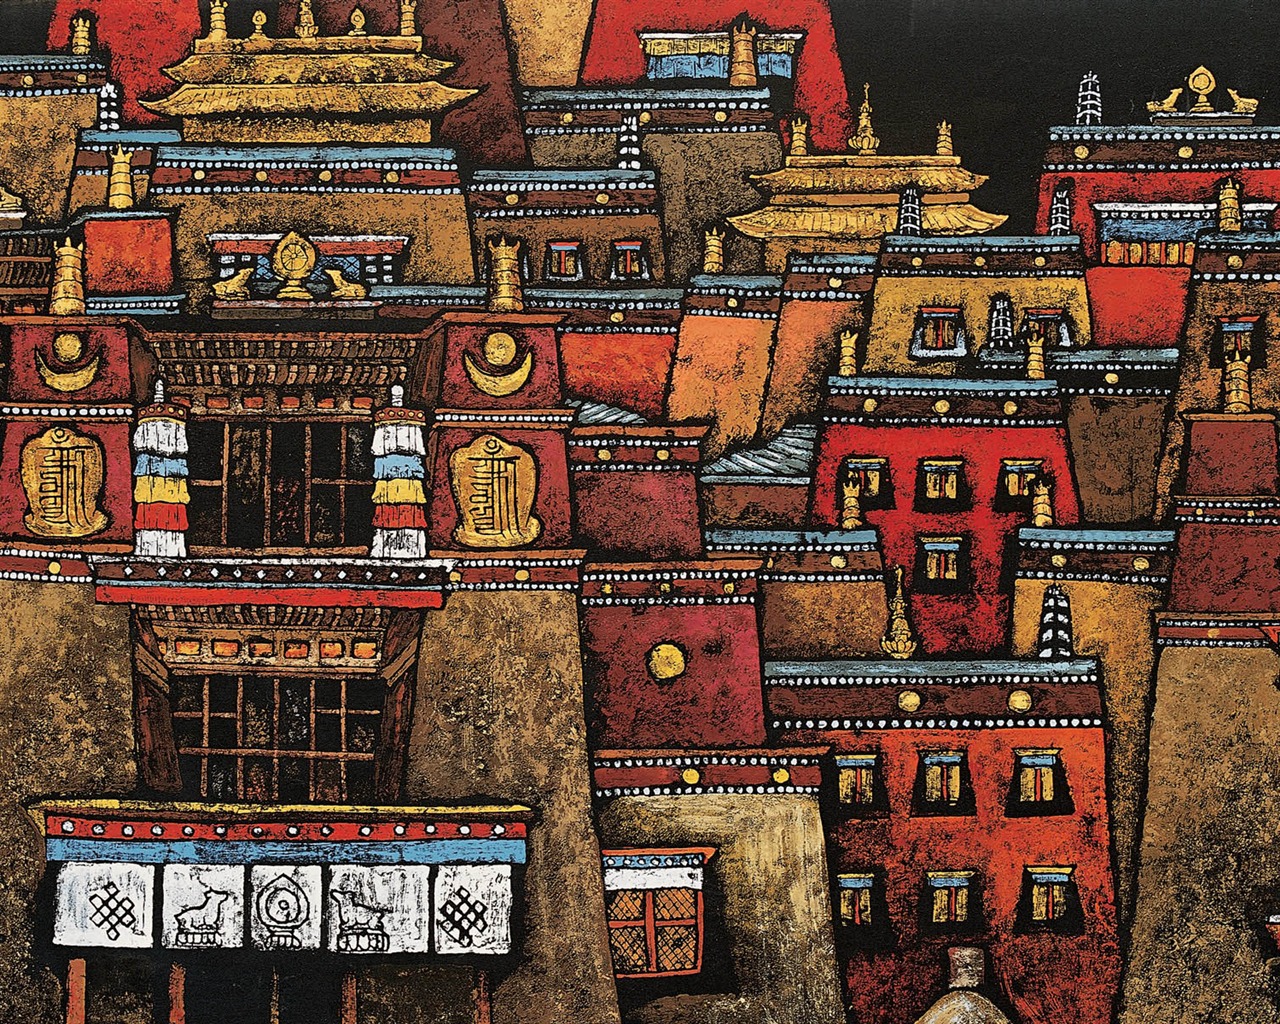 Cheung Pakistan fond d'écran d'impression du Tibet (1) #18 - 1280x1024